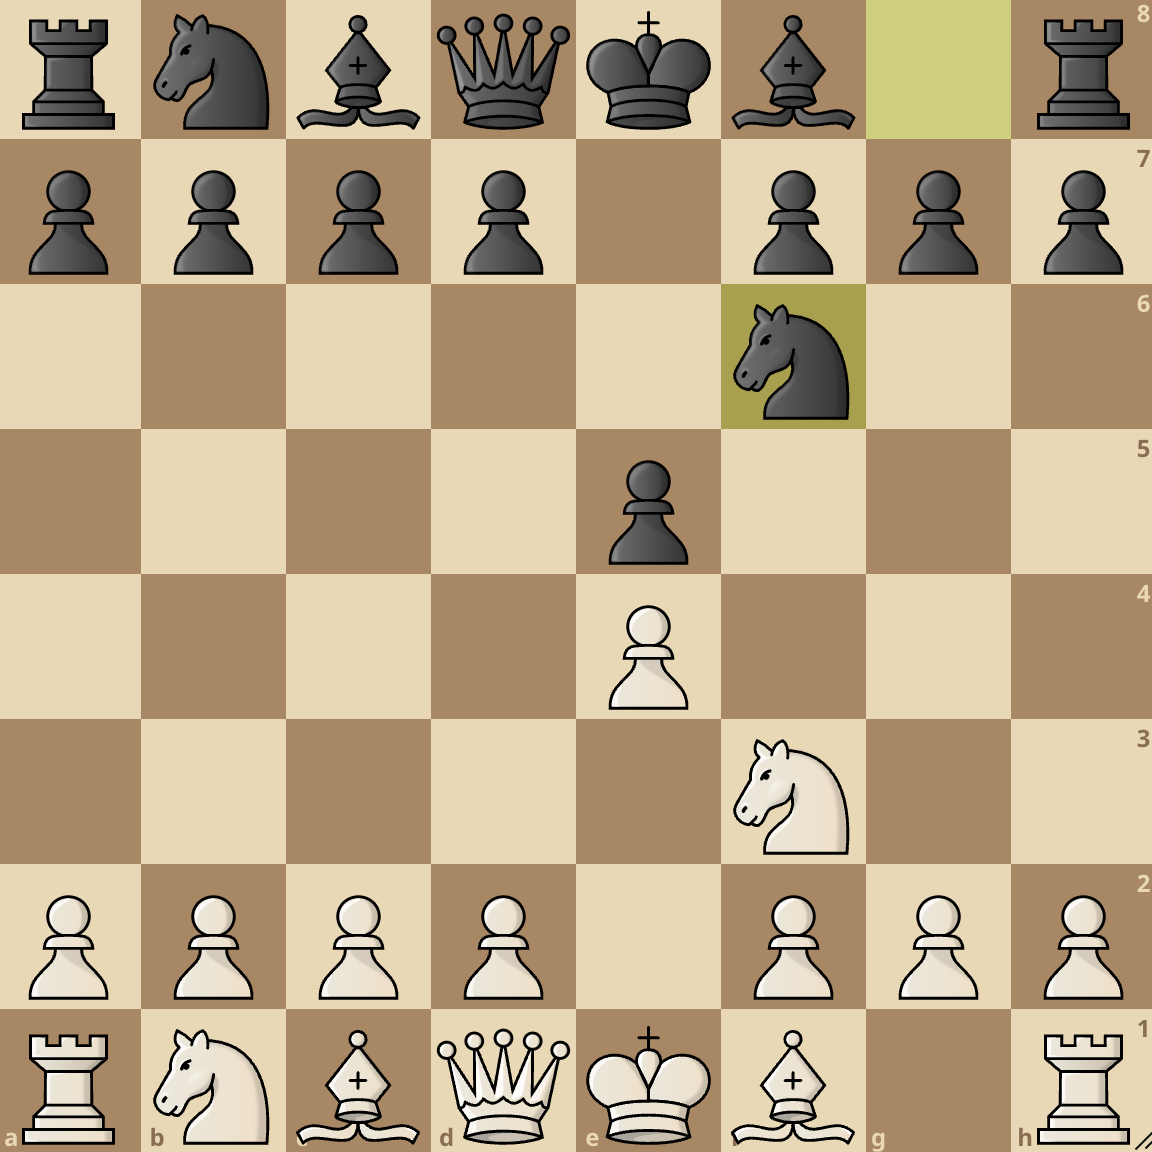 Petrov Defense: 1. e4 e5 2. Nf3 Nf6 